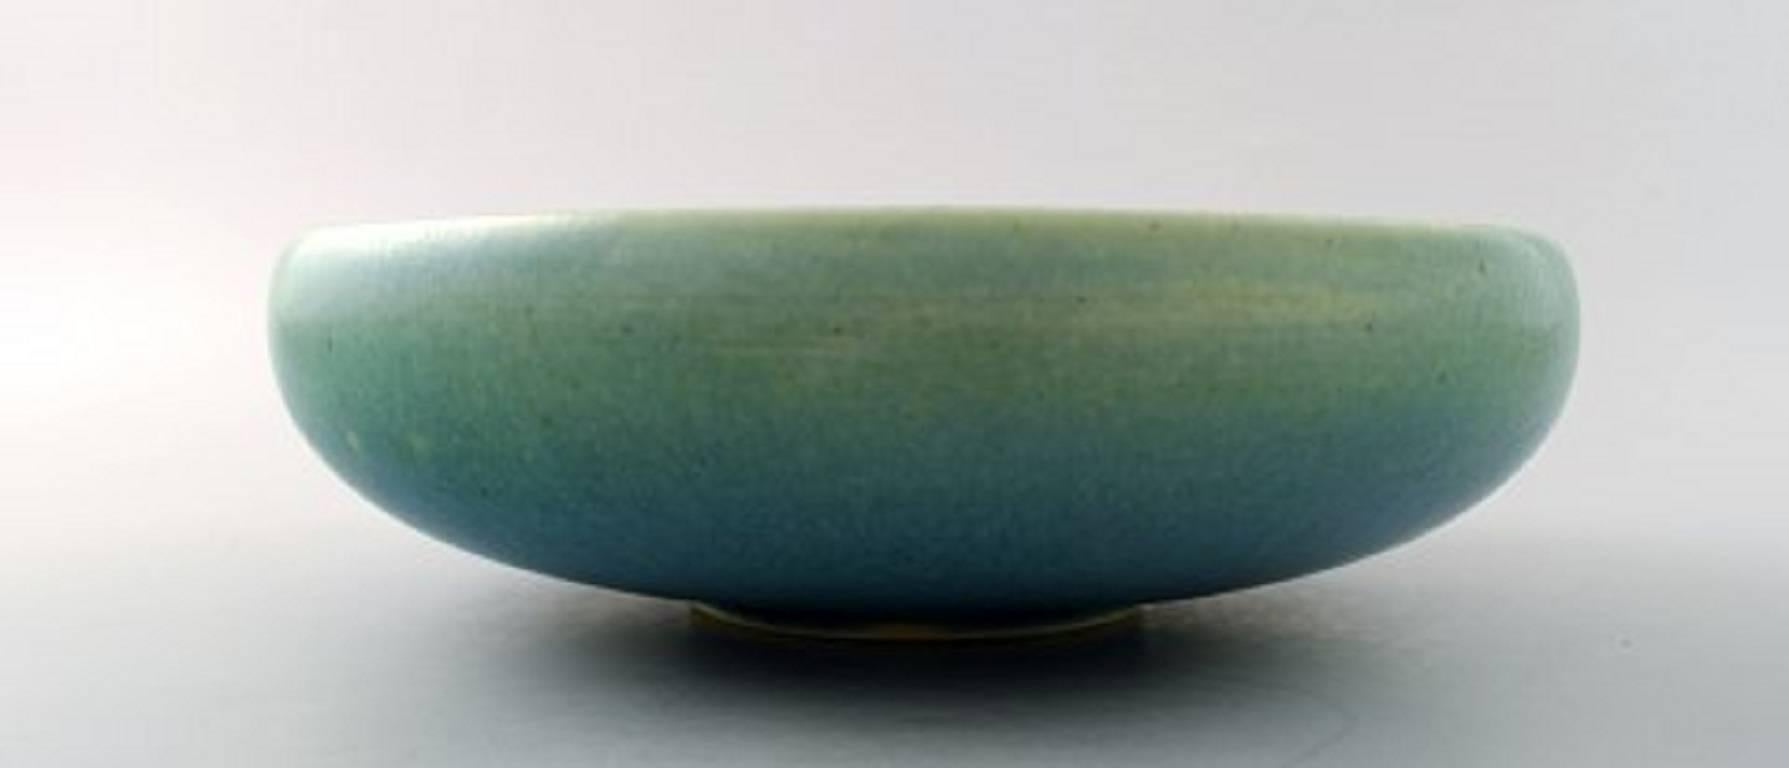 Danish Early Saxbo Ceramic Bowl in Modern Design, Beautiful Glaze in Green Tones